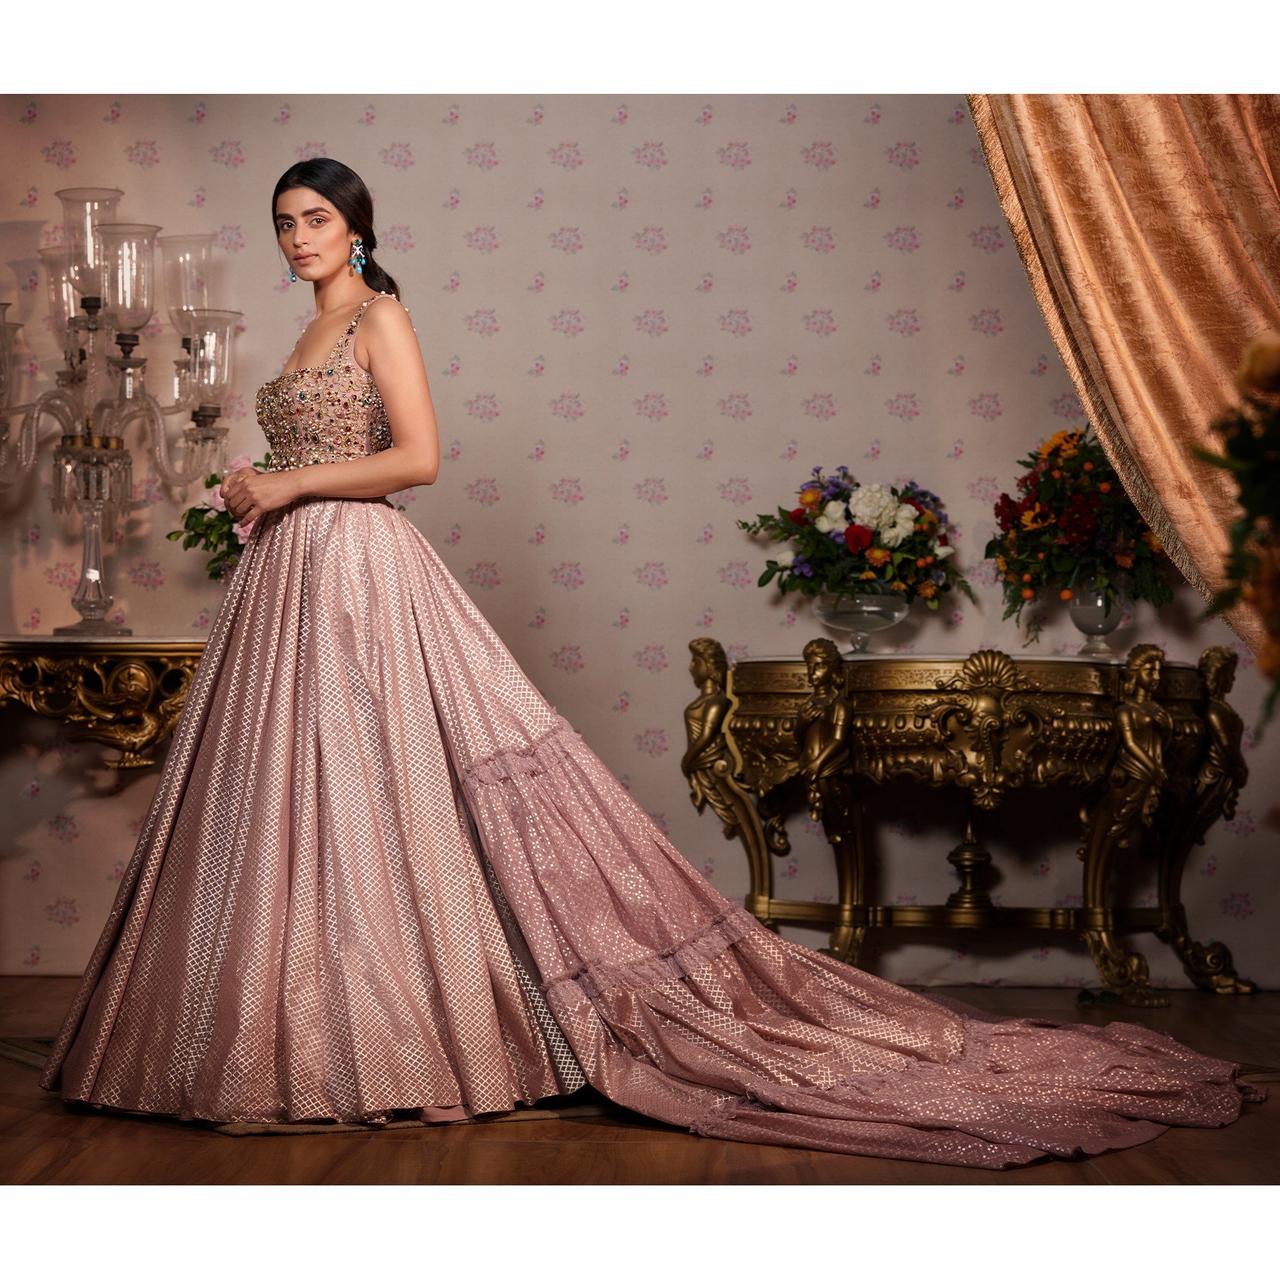 Neeta Lulla Kalamkari Collection 2013 | Indian fashion, Kalamkari dresses,  Fashion dresses